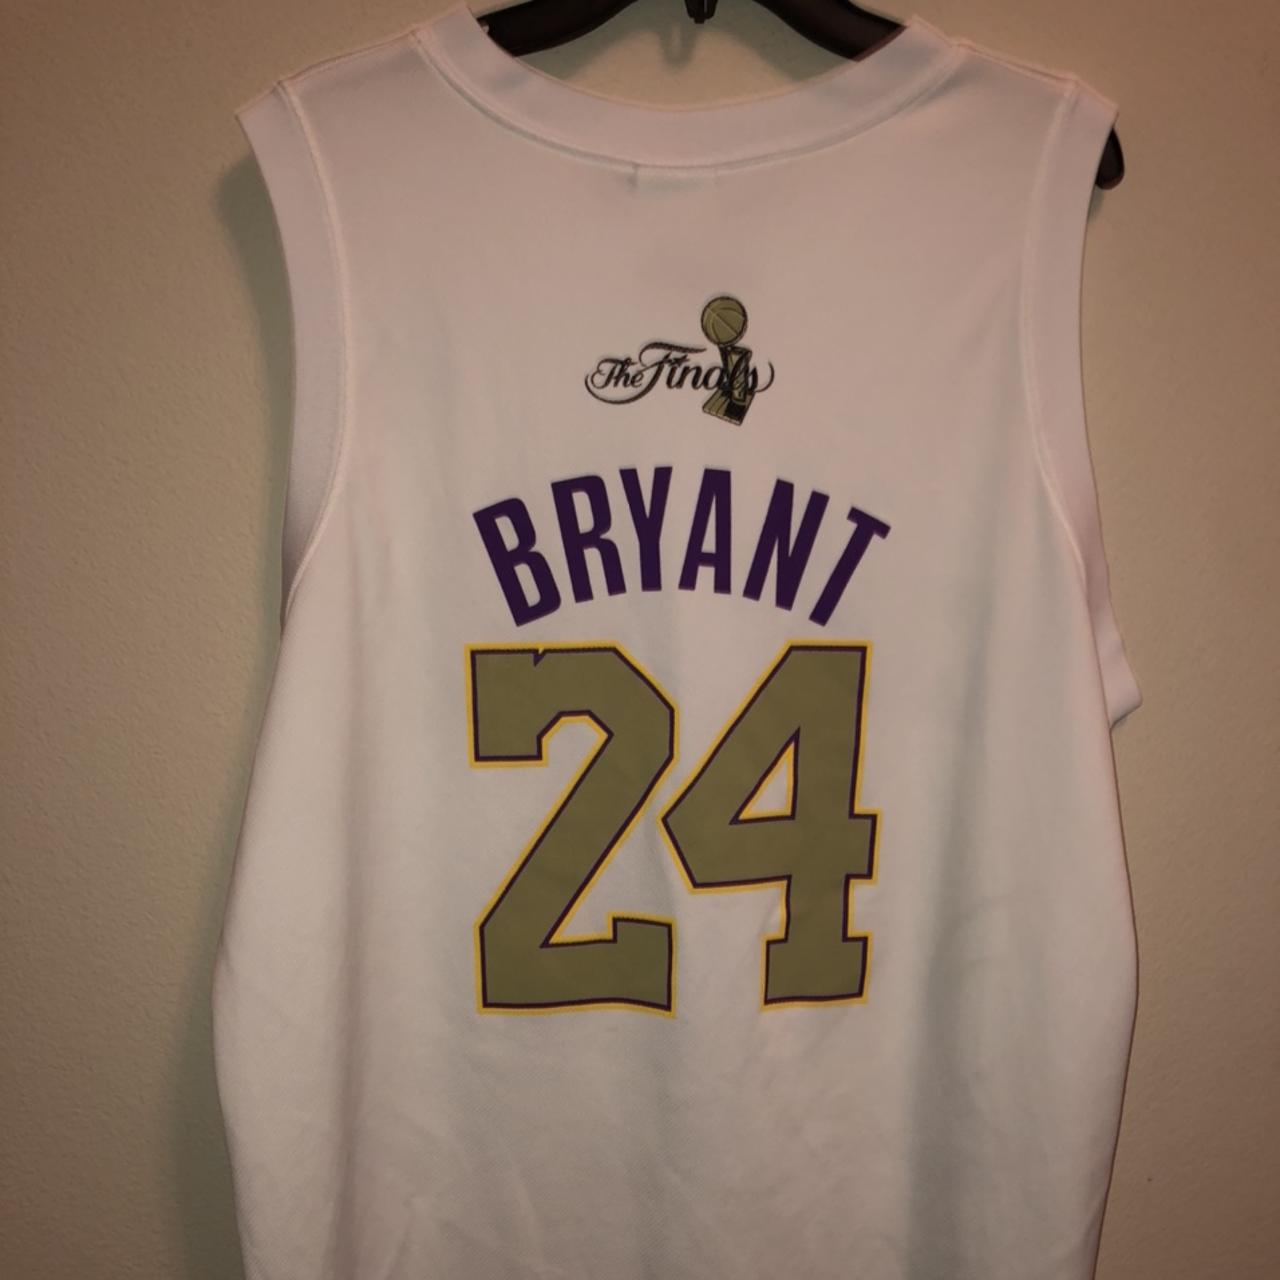 RARE 2009 Champions NBA Lakers Kobe Bryant Jersey - Depop